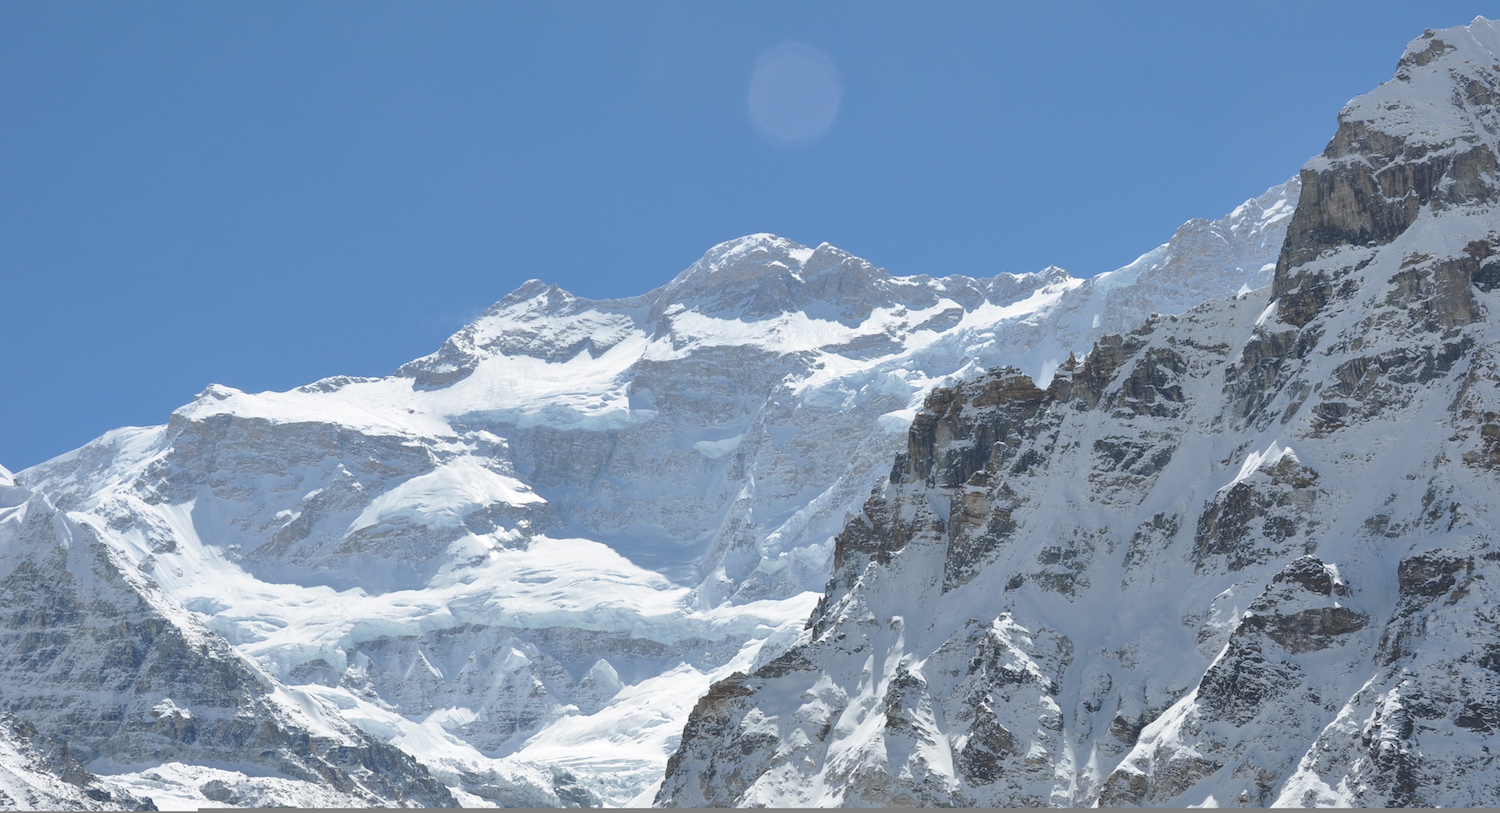 Mt. Kanchenjunga (8586m)